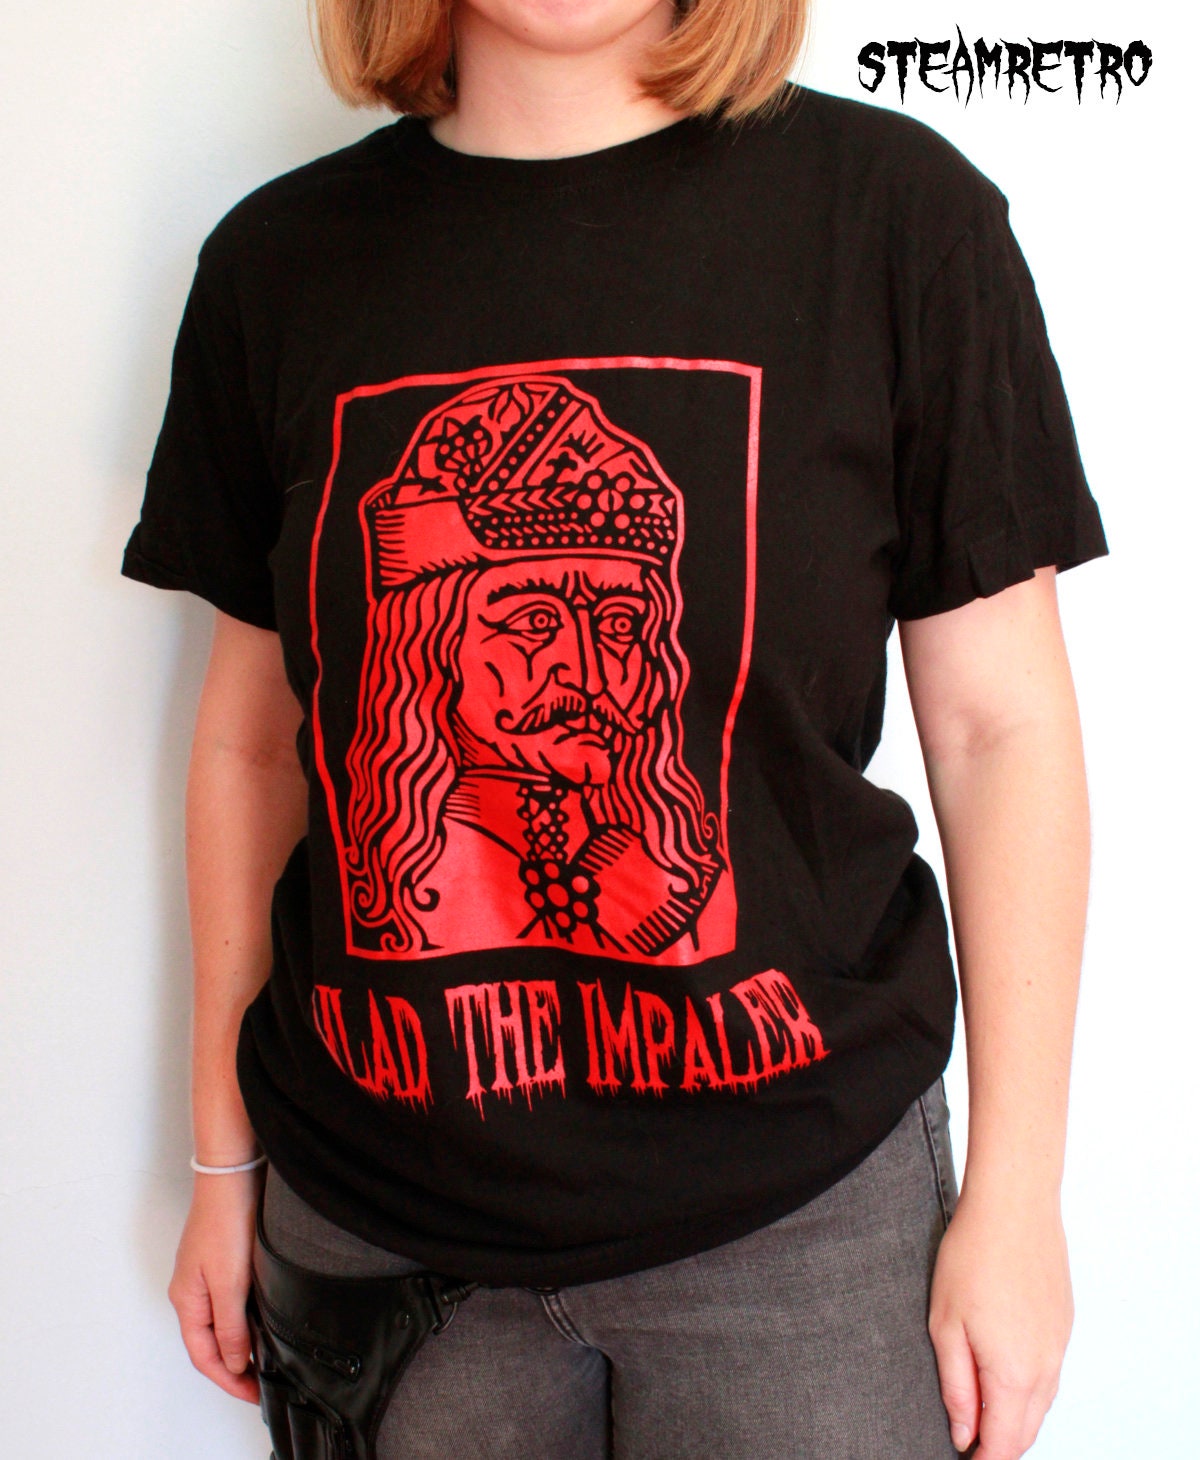 Vlad the Impaler Dracula T-Shirt